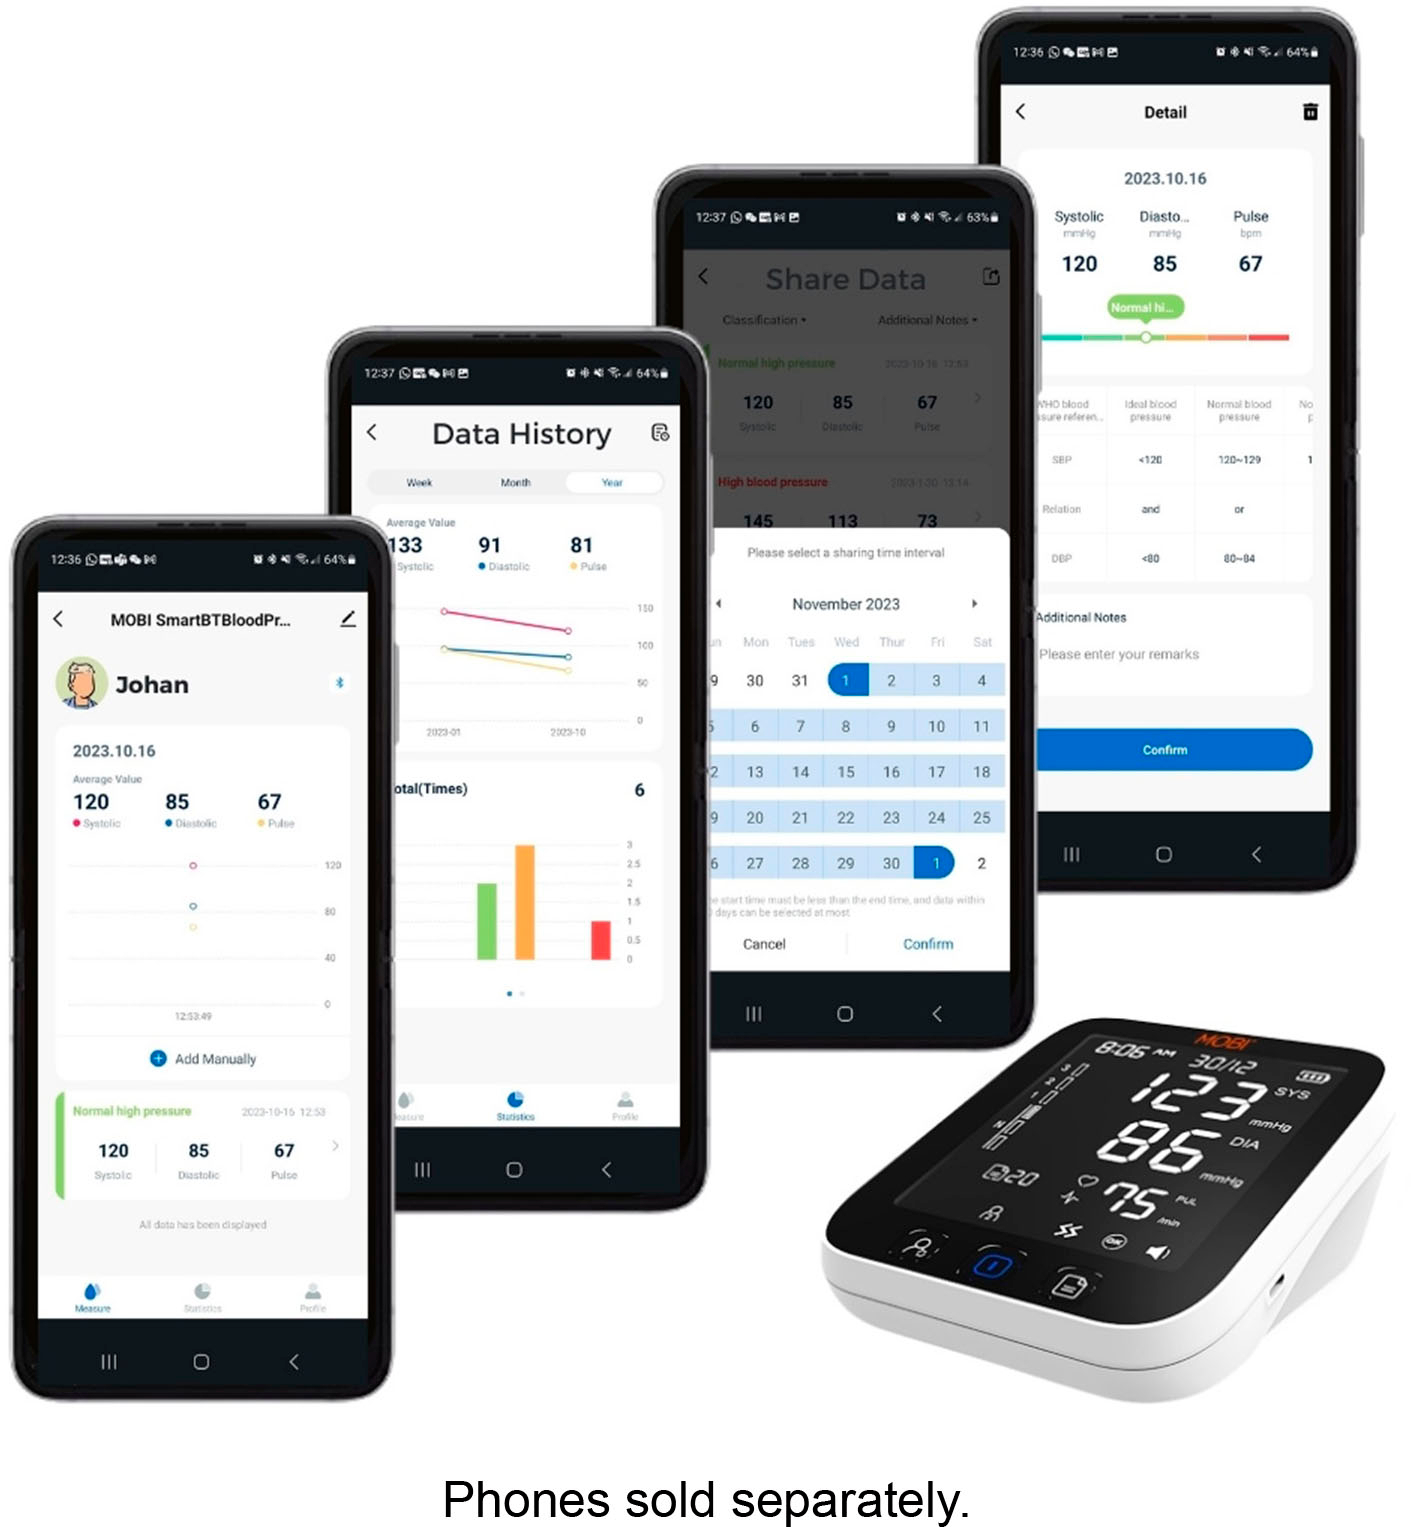 Best Buy: Qardio Arm Wireless Smart Blood Pressure Monitor White A100QI